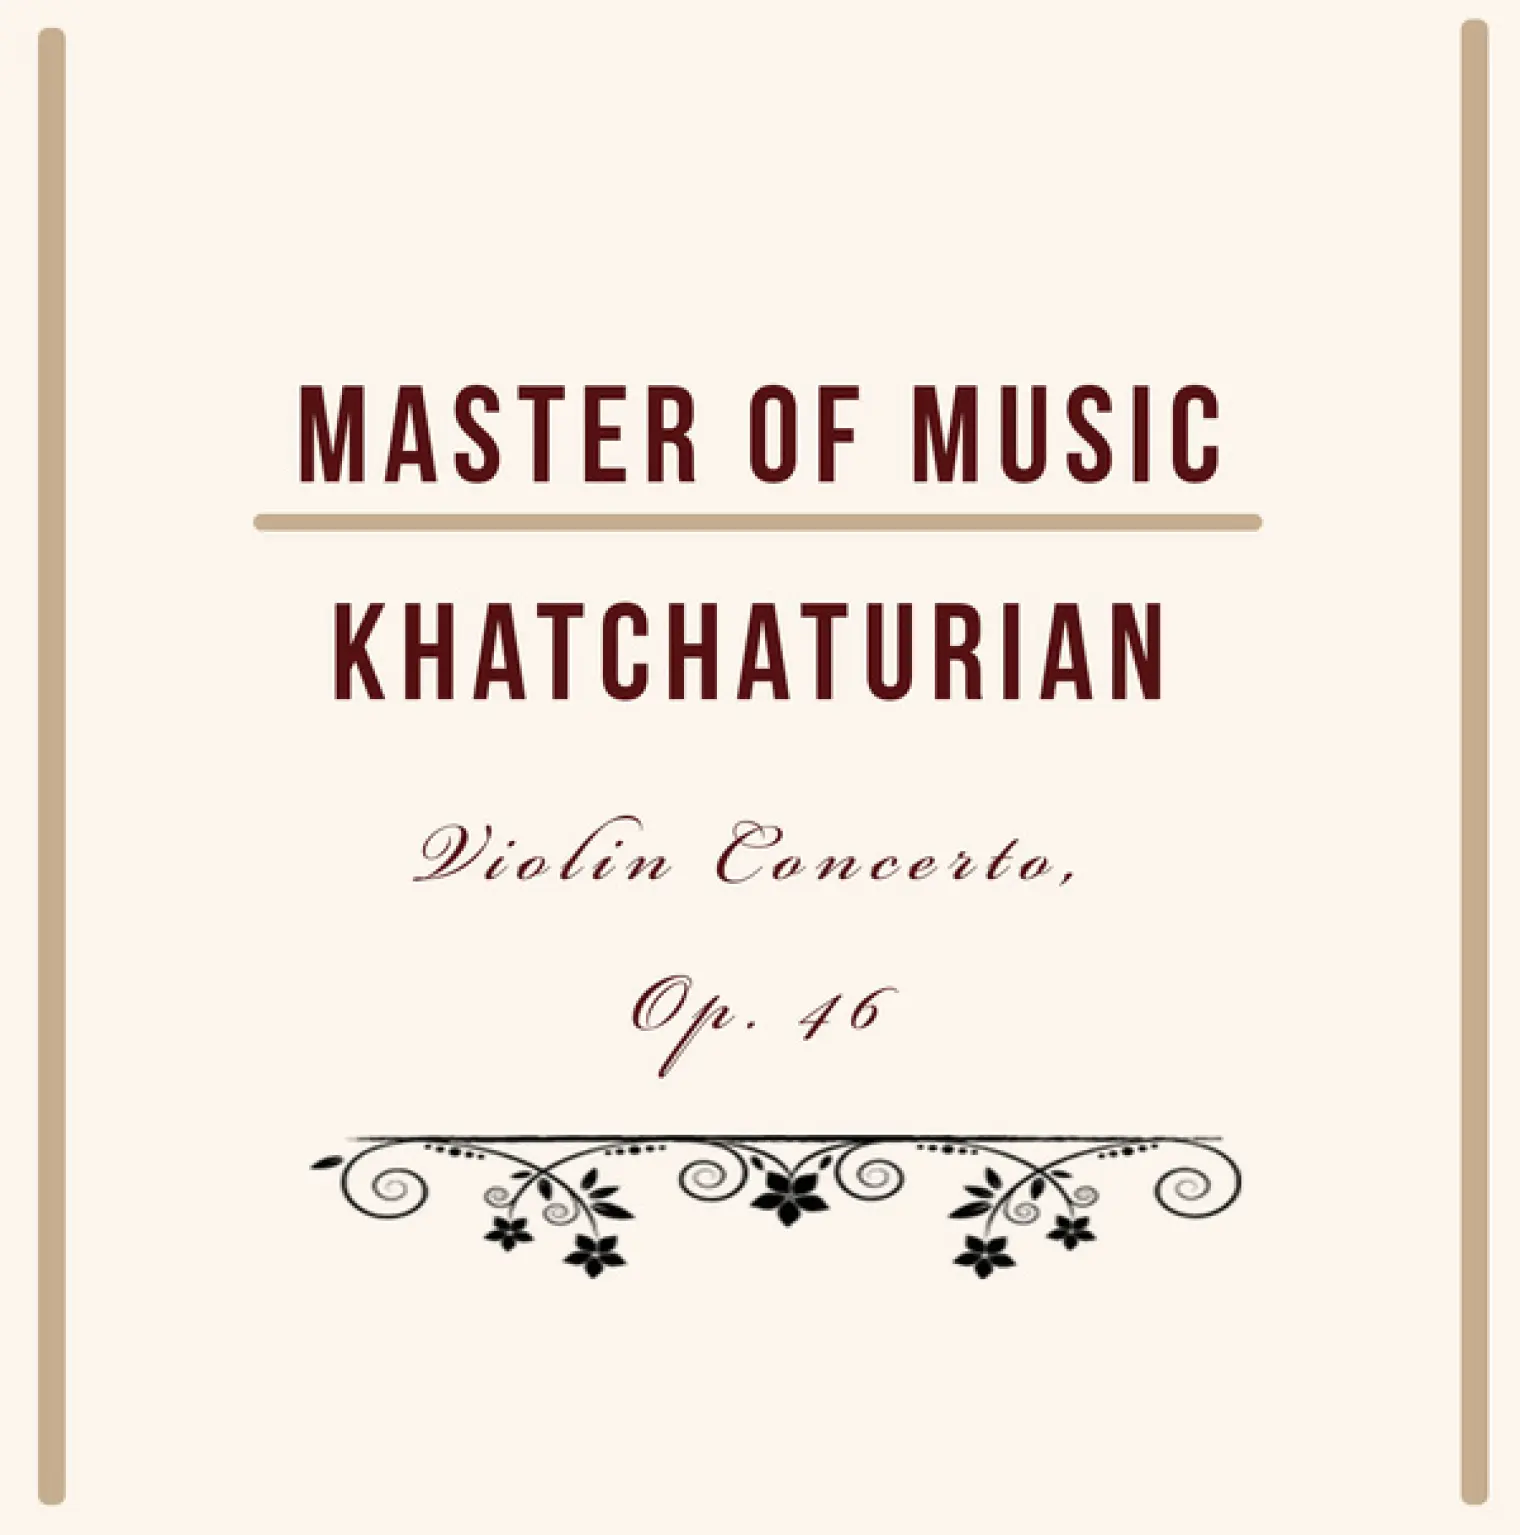 Master of Music, Khatchaturian - Violin Concerto, Op. 46 -  David Oistrakh 